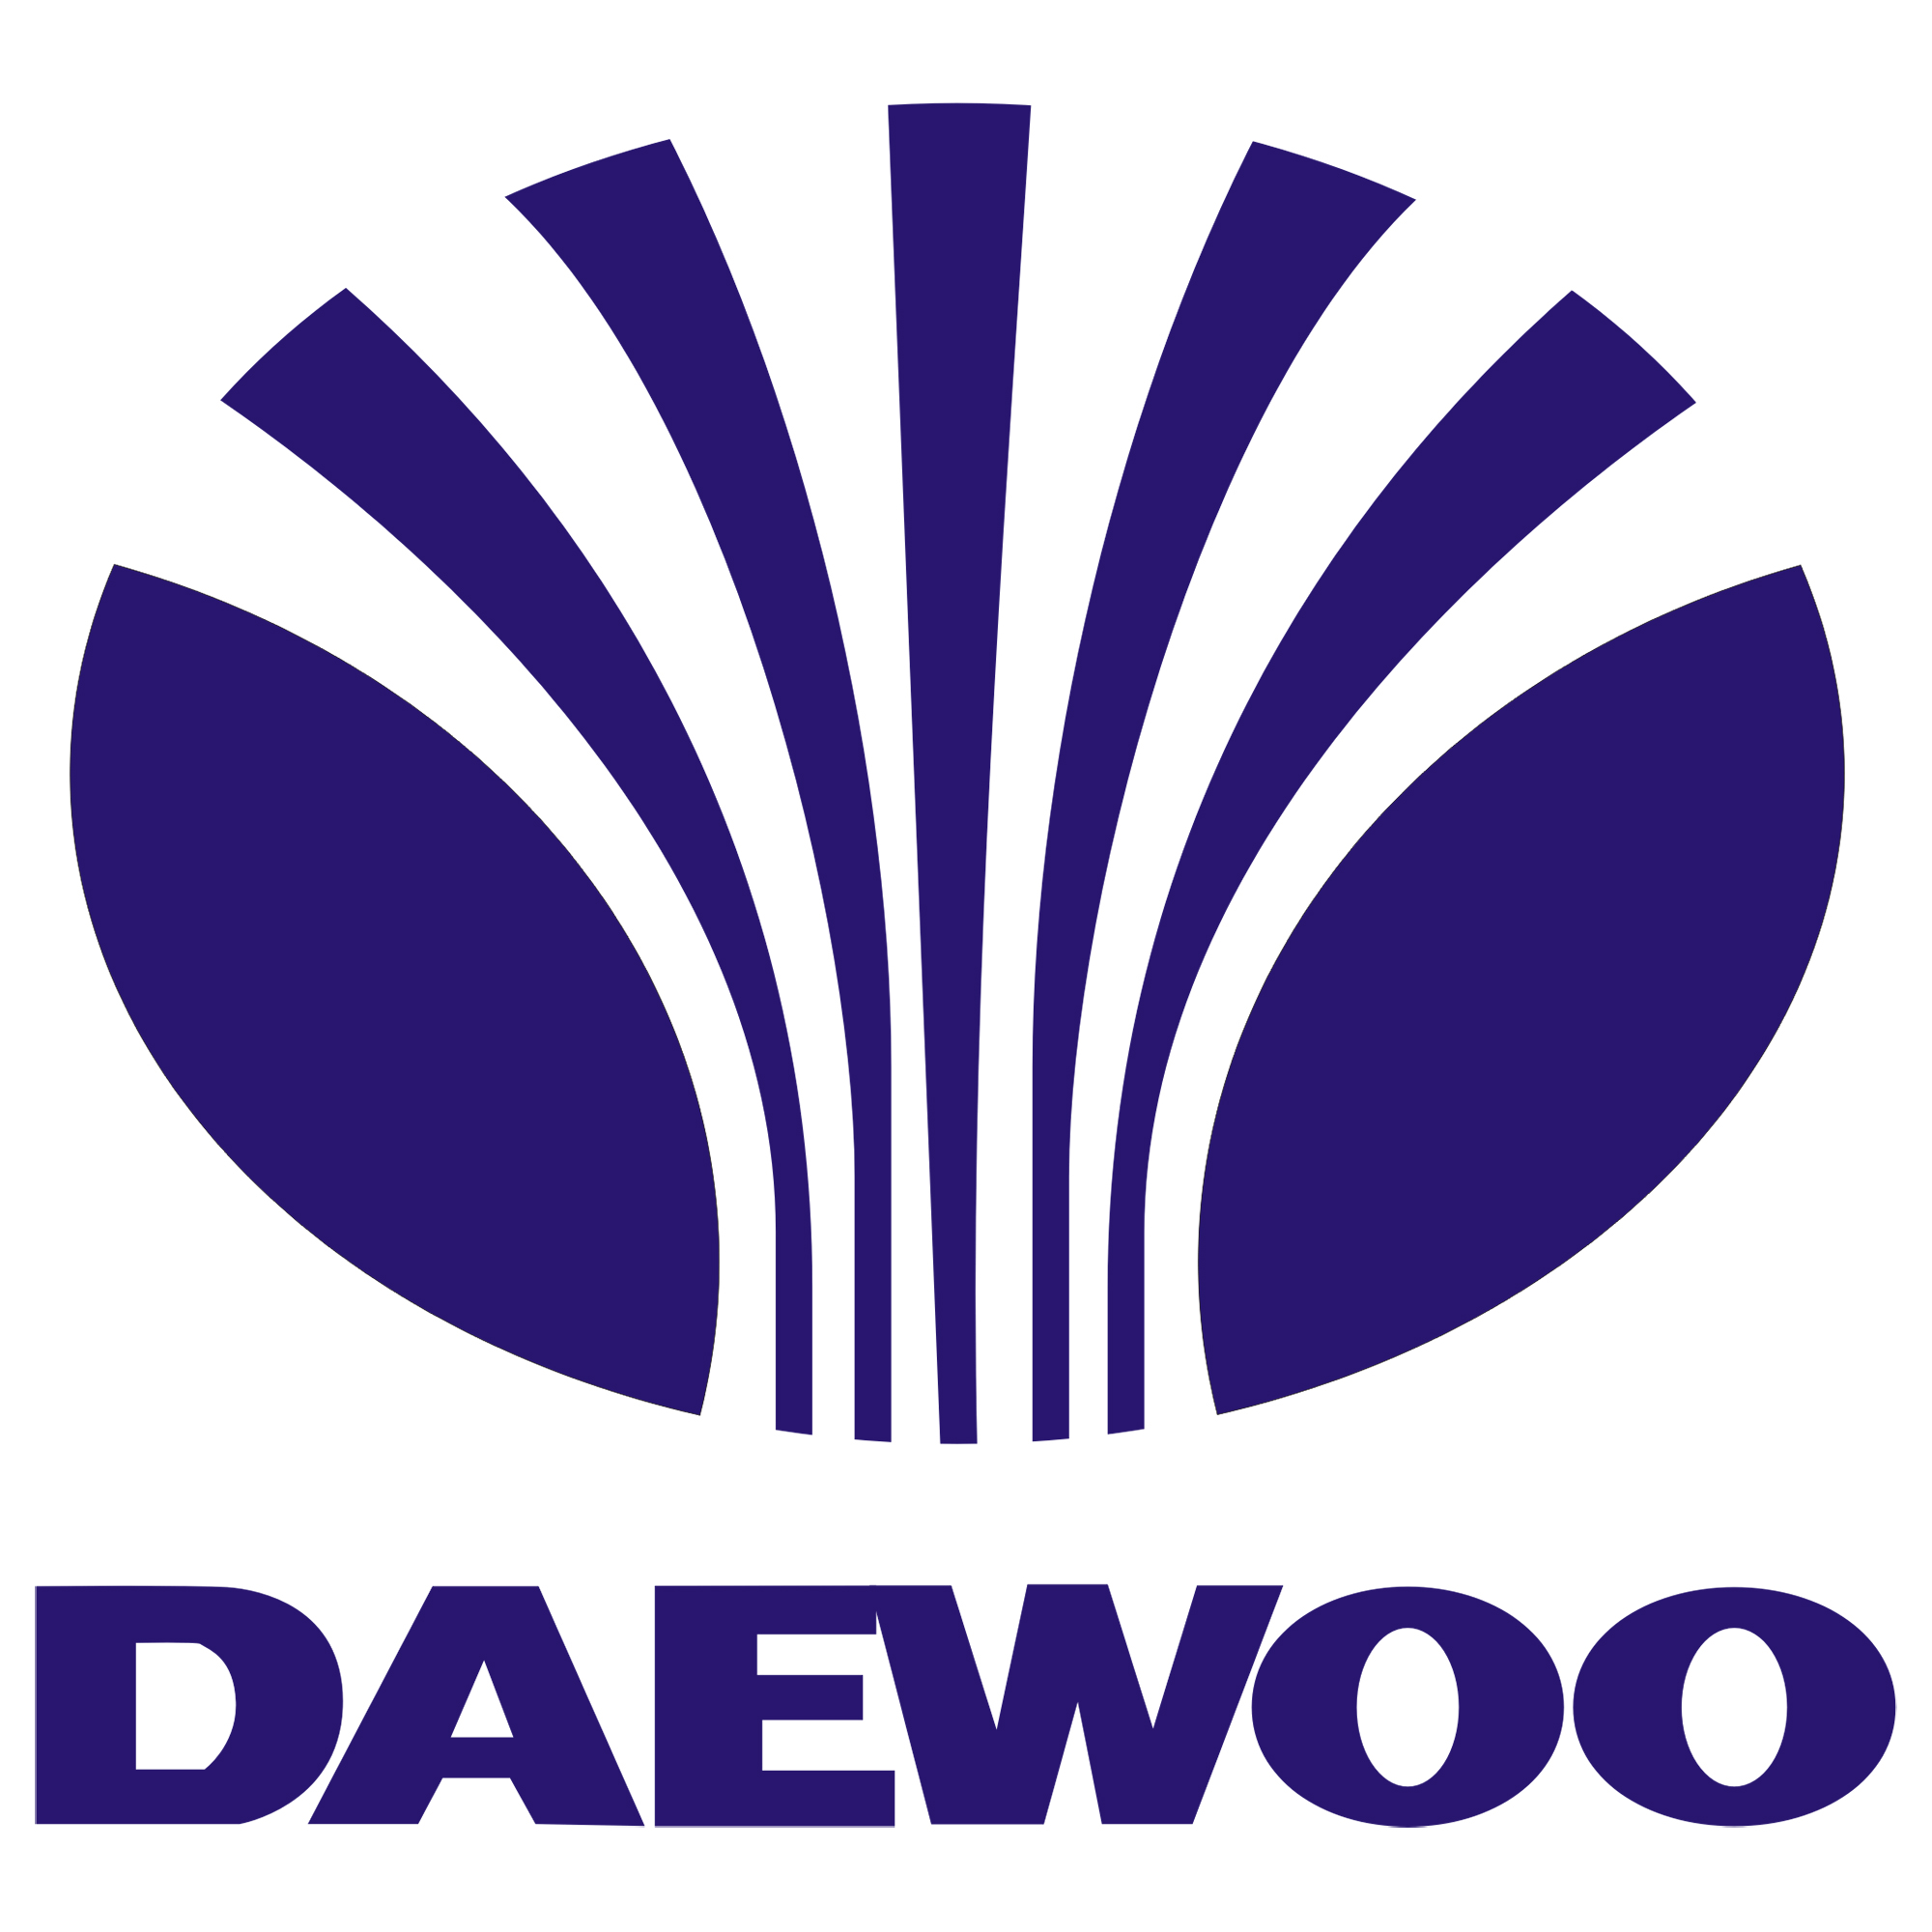 Daewoo 7173300811 SCREW TAPP 3X8 Genuine Original Equipment Manufacturer (OEM) Part